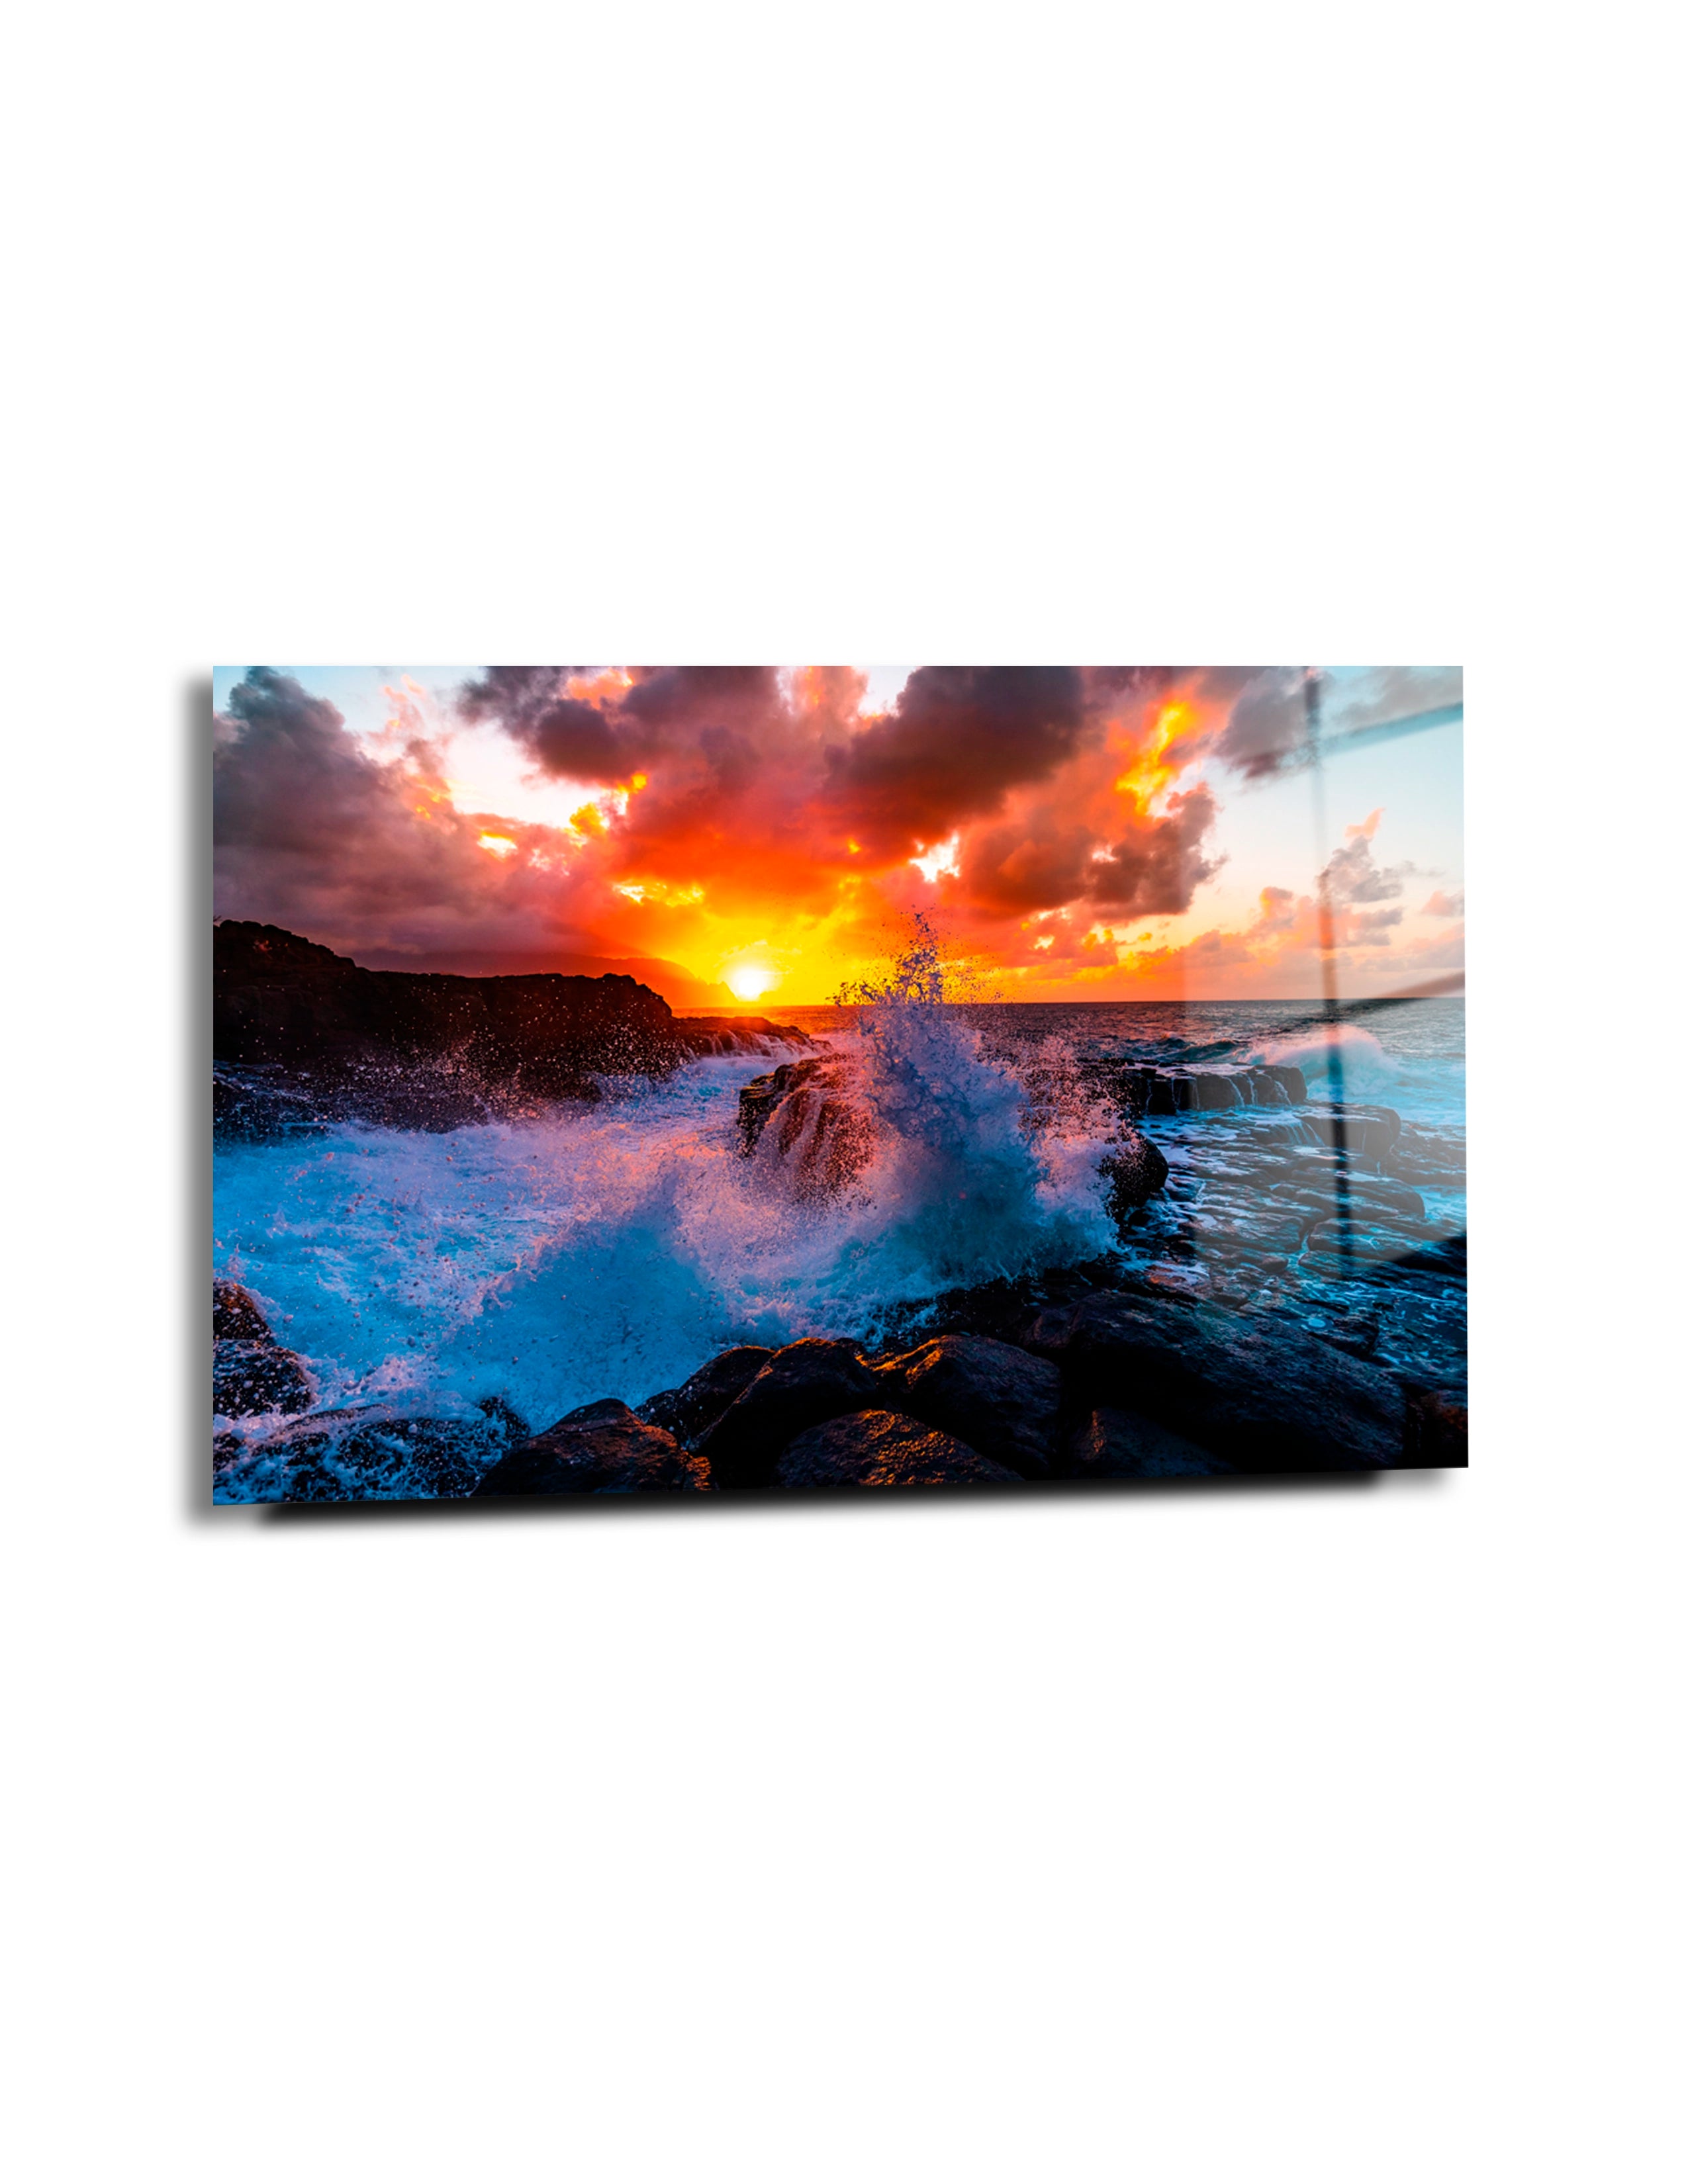 beautiful Scenery Rock Formations By Sea Queens Bath Kauai Hawaii Sunset